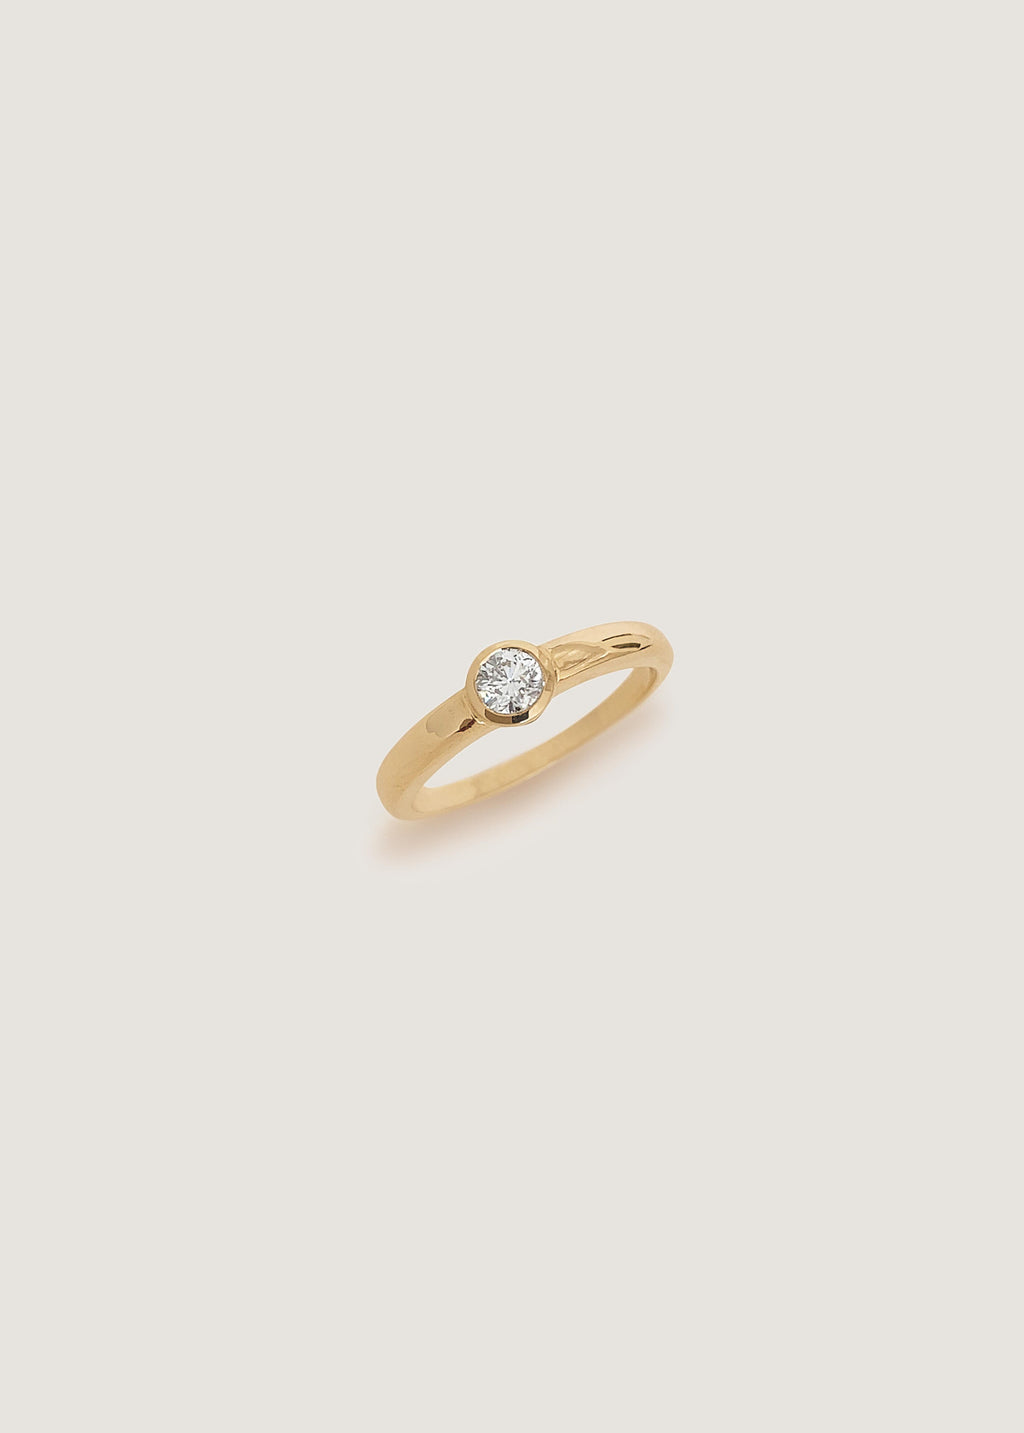 alt="Fleur Round Diamond Ring II"